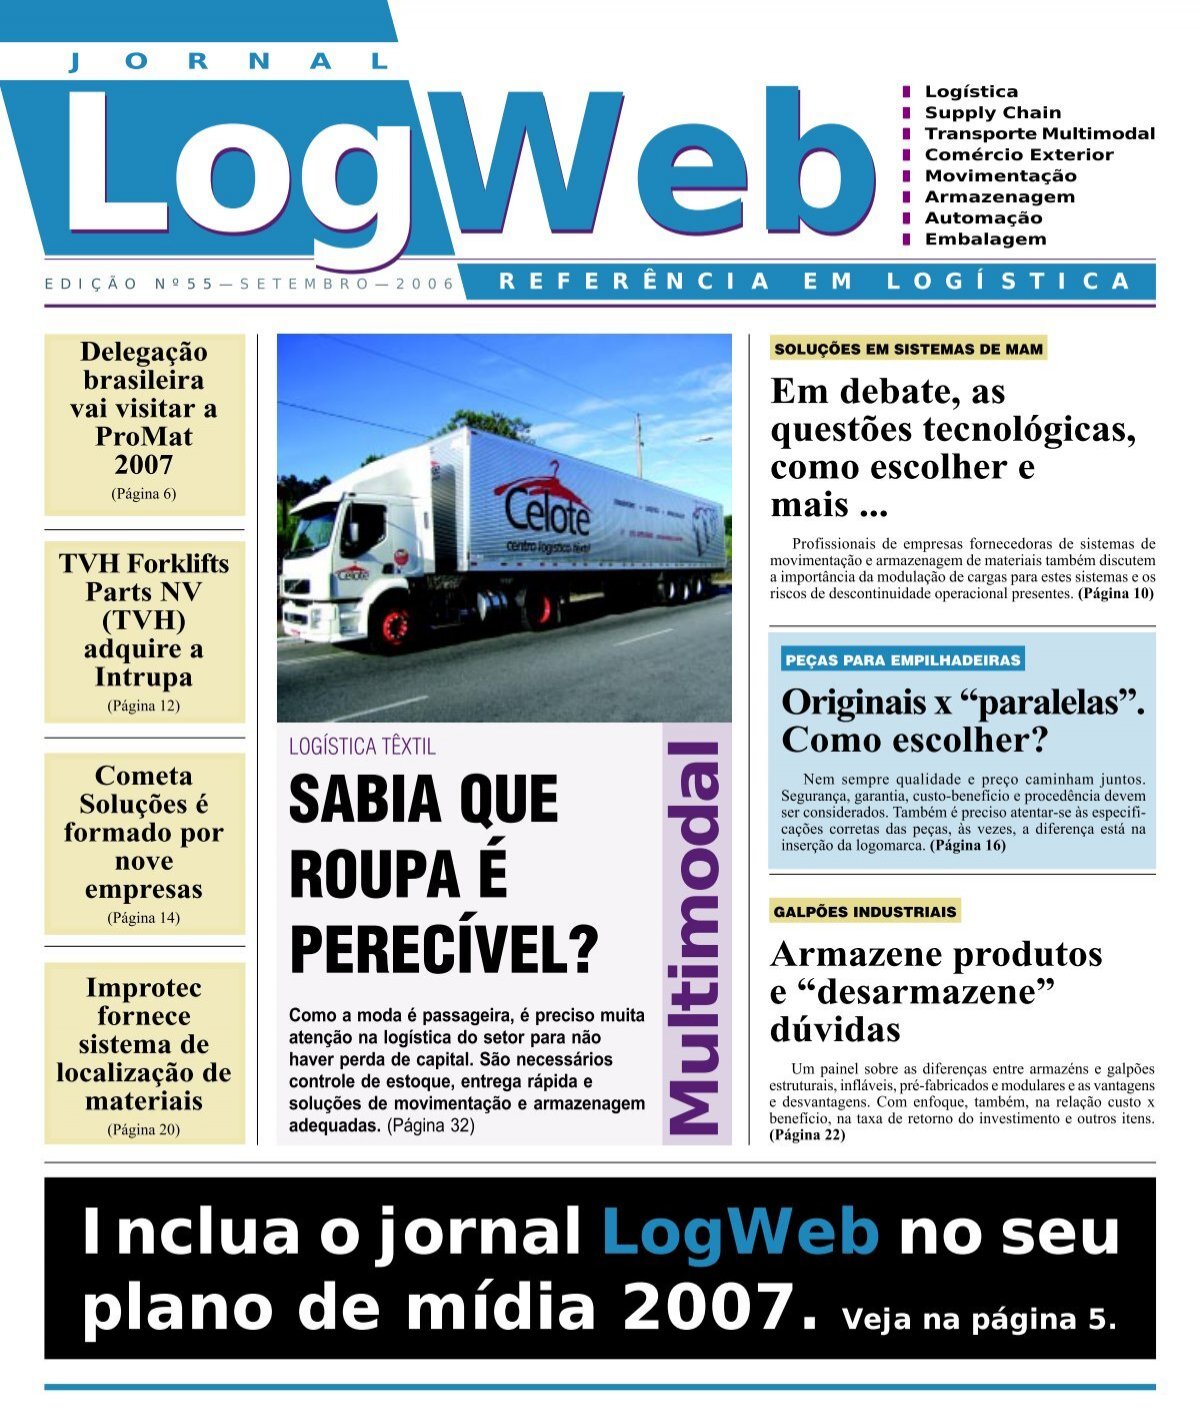 EdiÃ§Ã£o 116 download da revista completa - Logweb